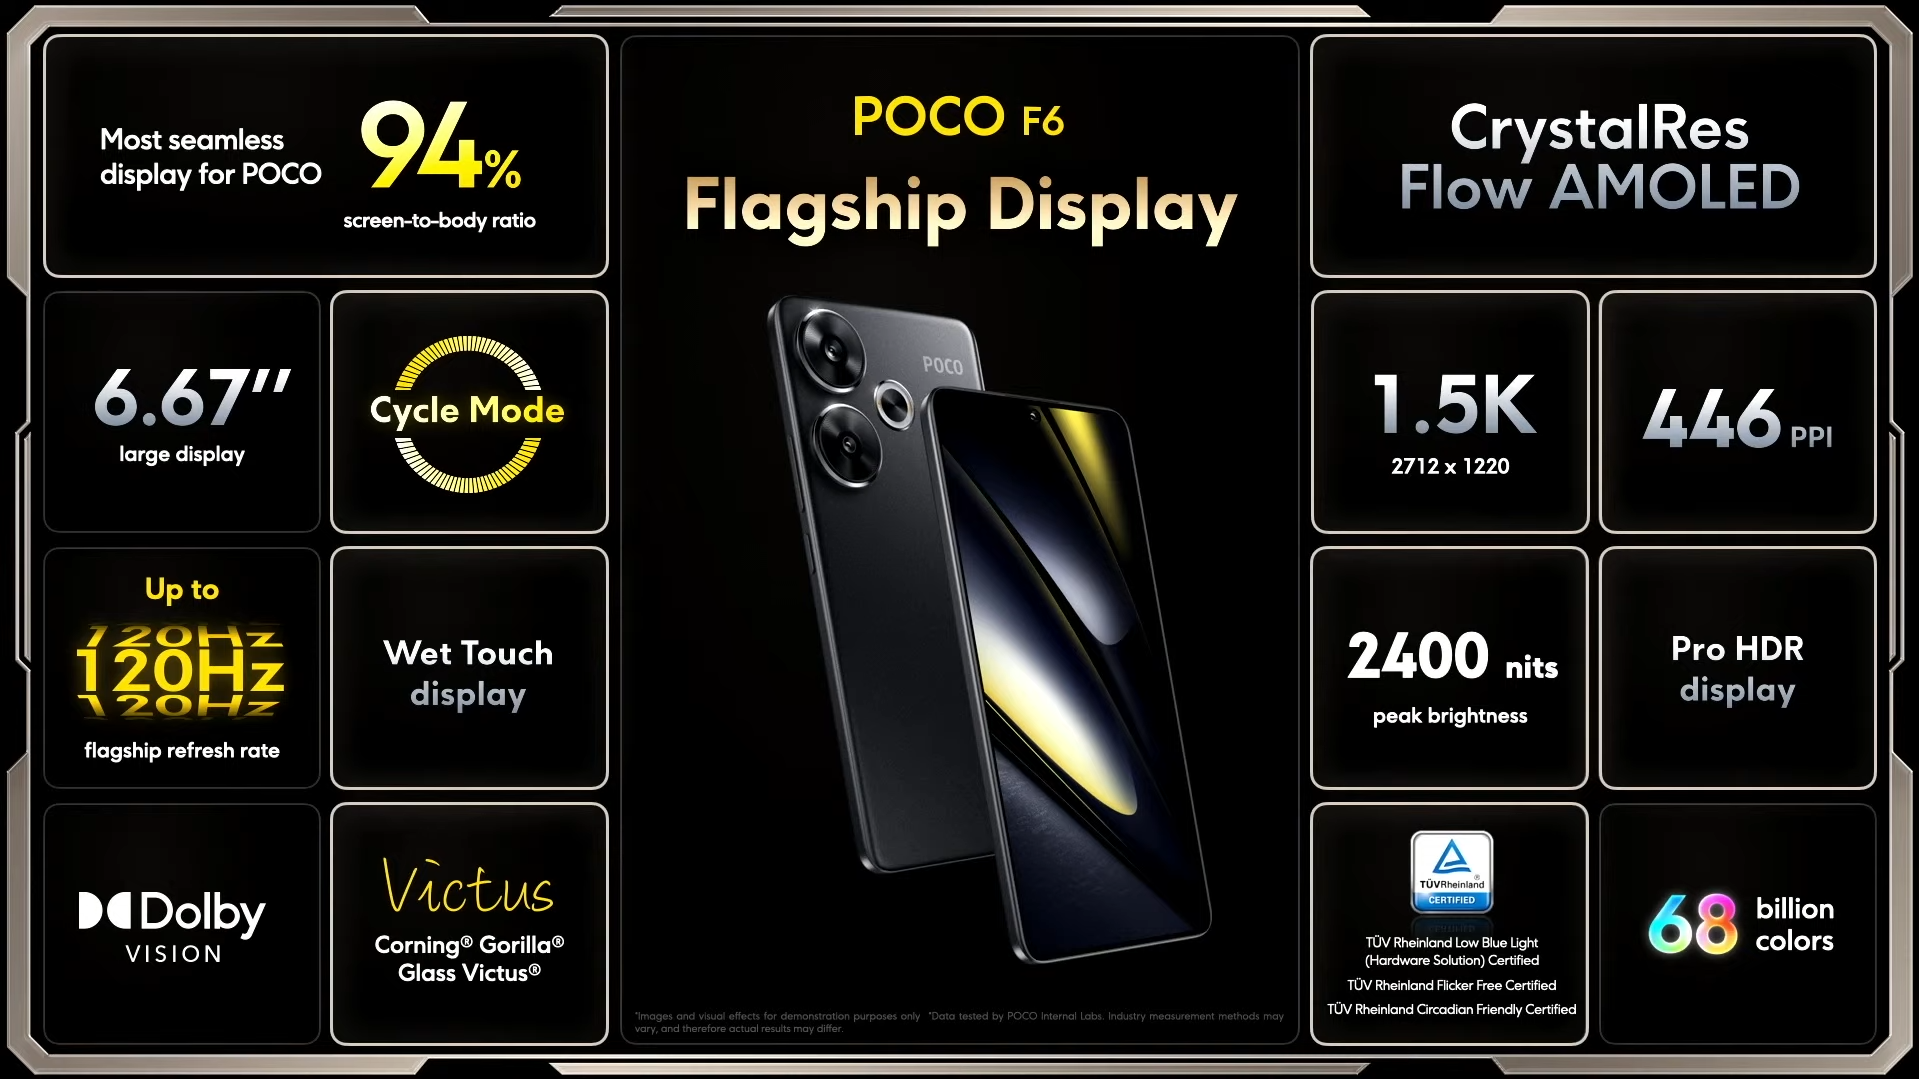 POCO F6 features